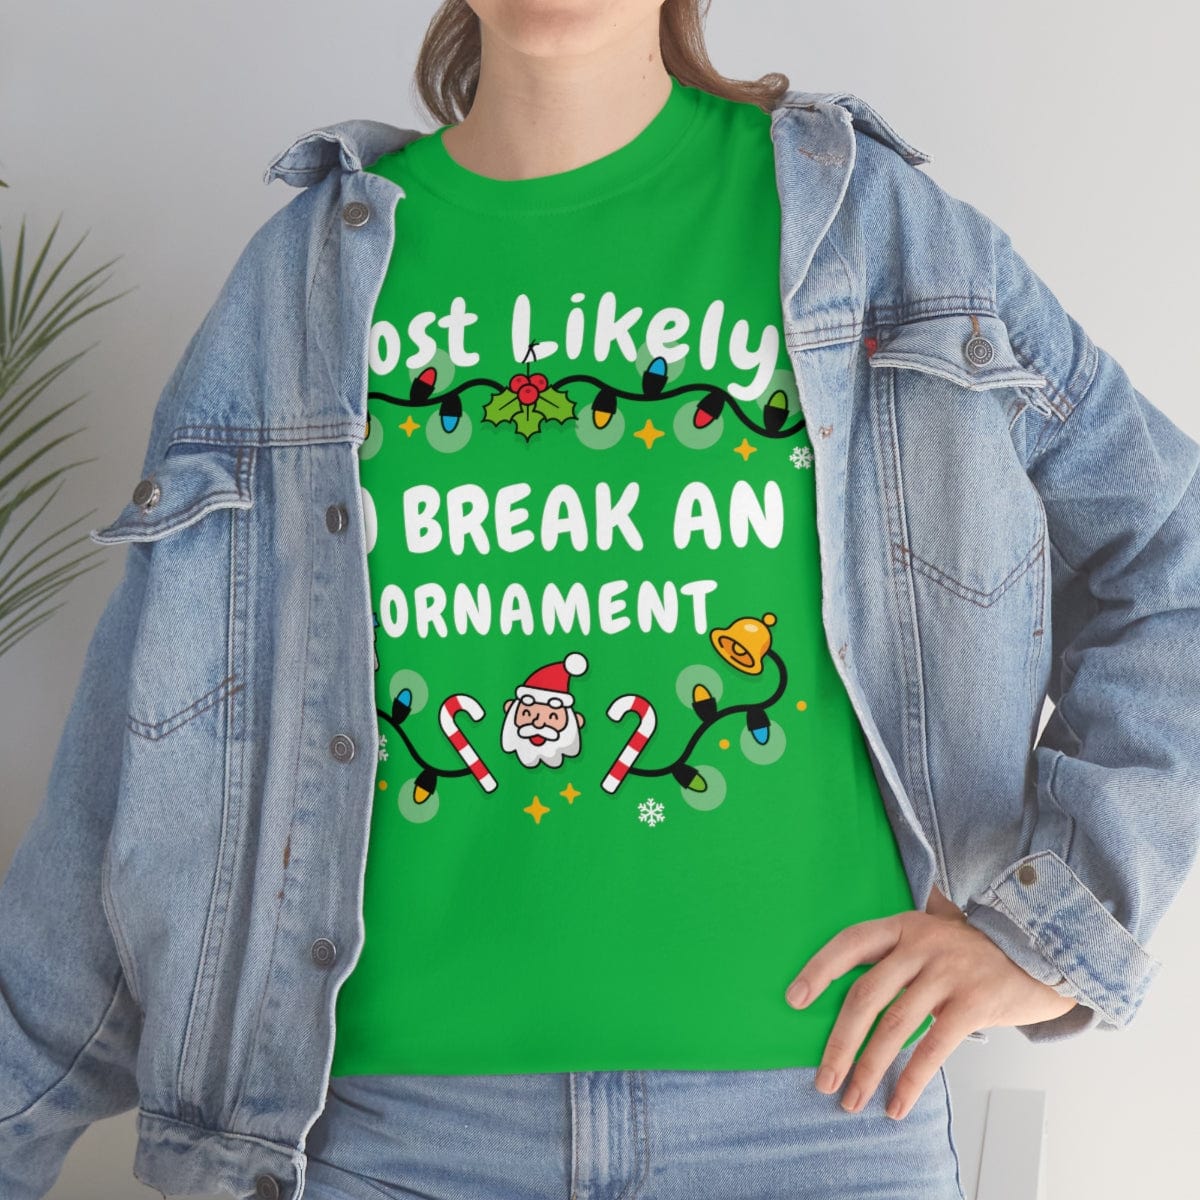 To break an ornament